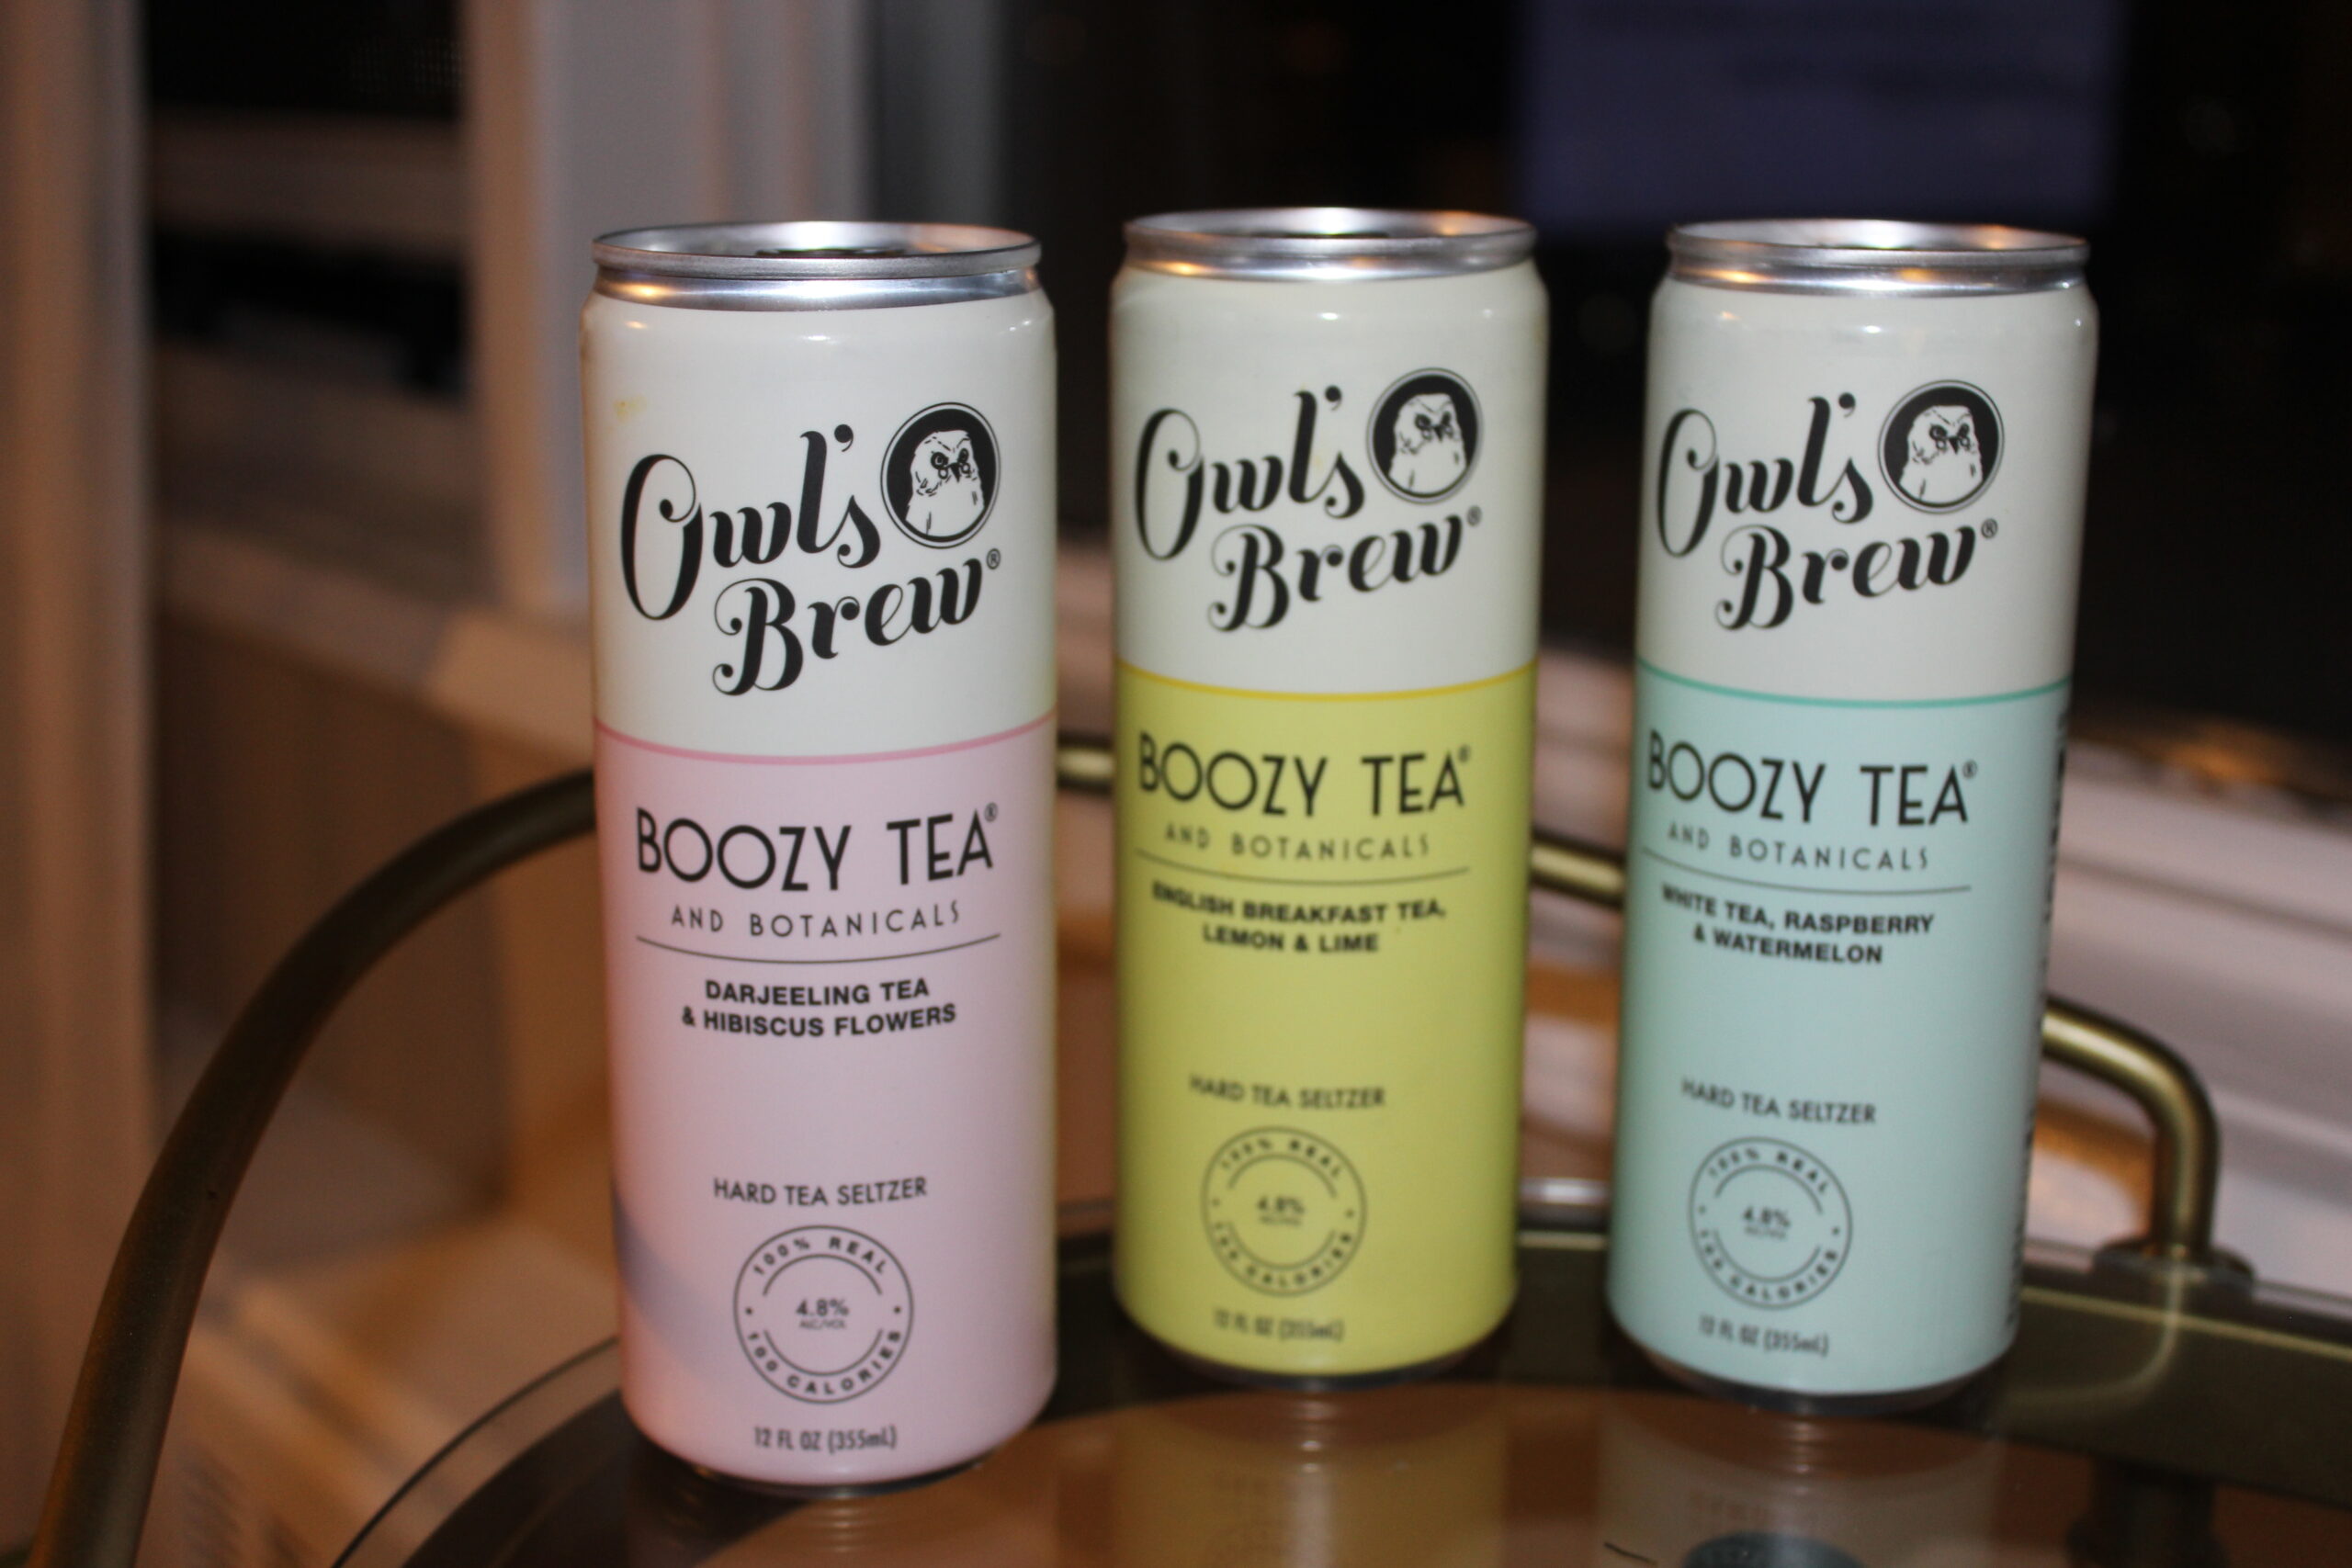 Owl’s Brew Boozy Tea